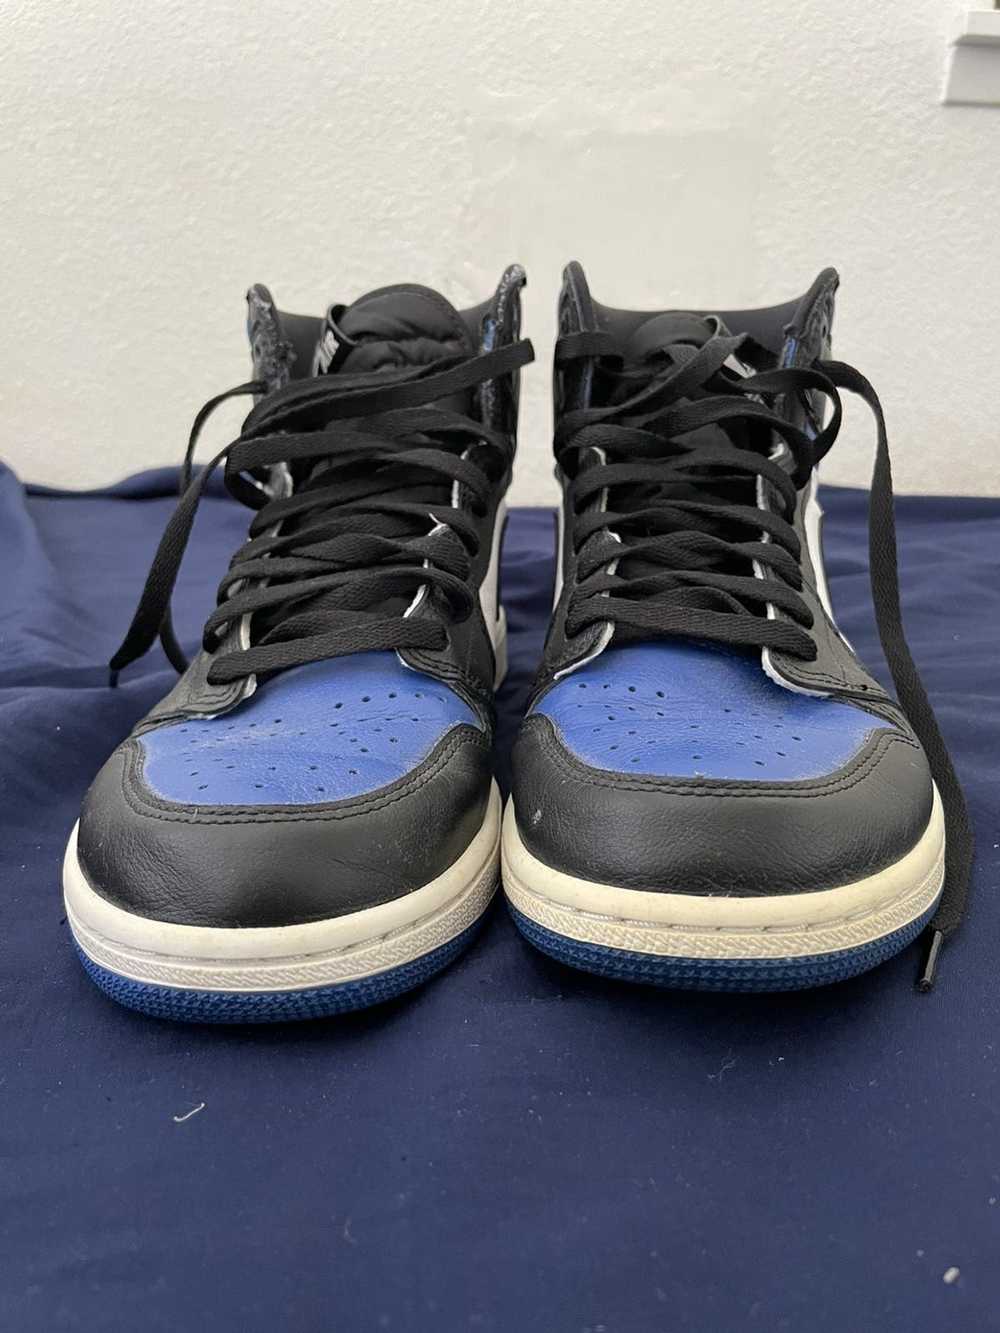 Jordan Brand × Nike Air Jordan 1 Royal Toe - image 3